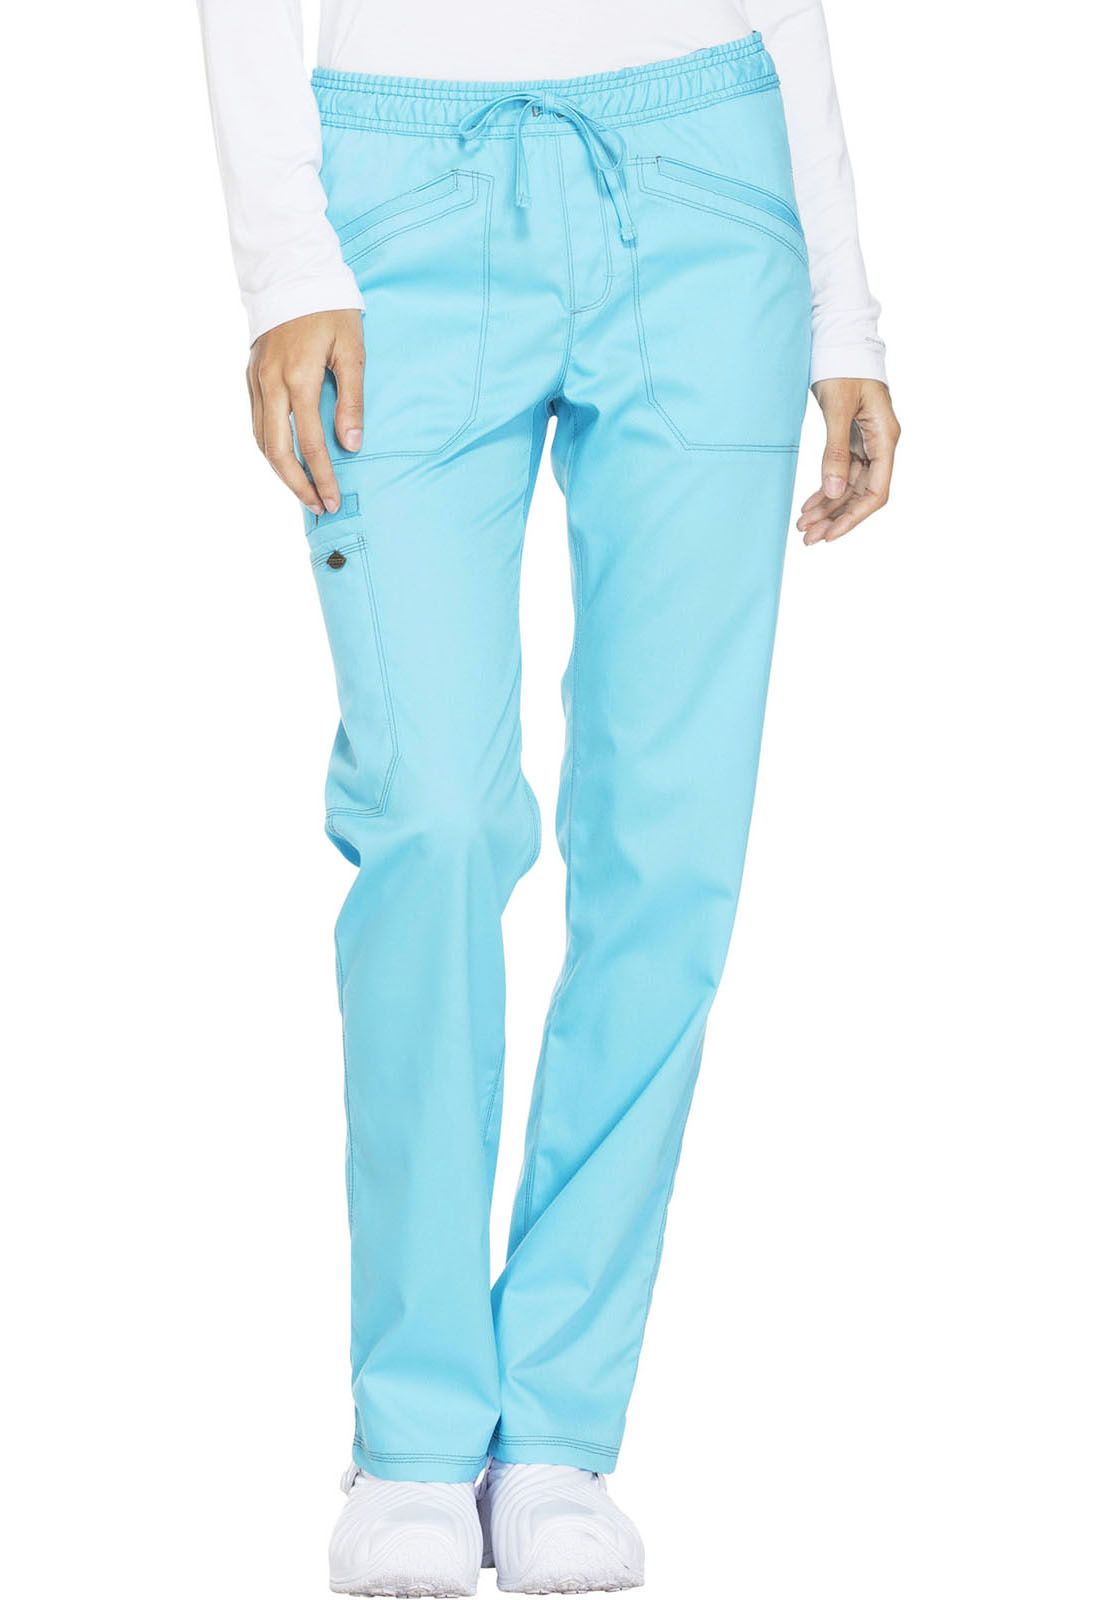 DICKIES Turquoise Mid Rise Straight Leg Women's Petite Drawstring Pants DK106P